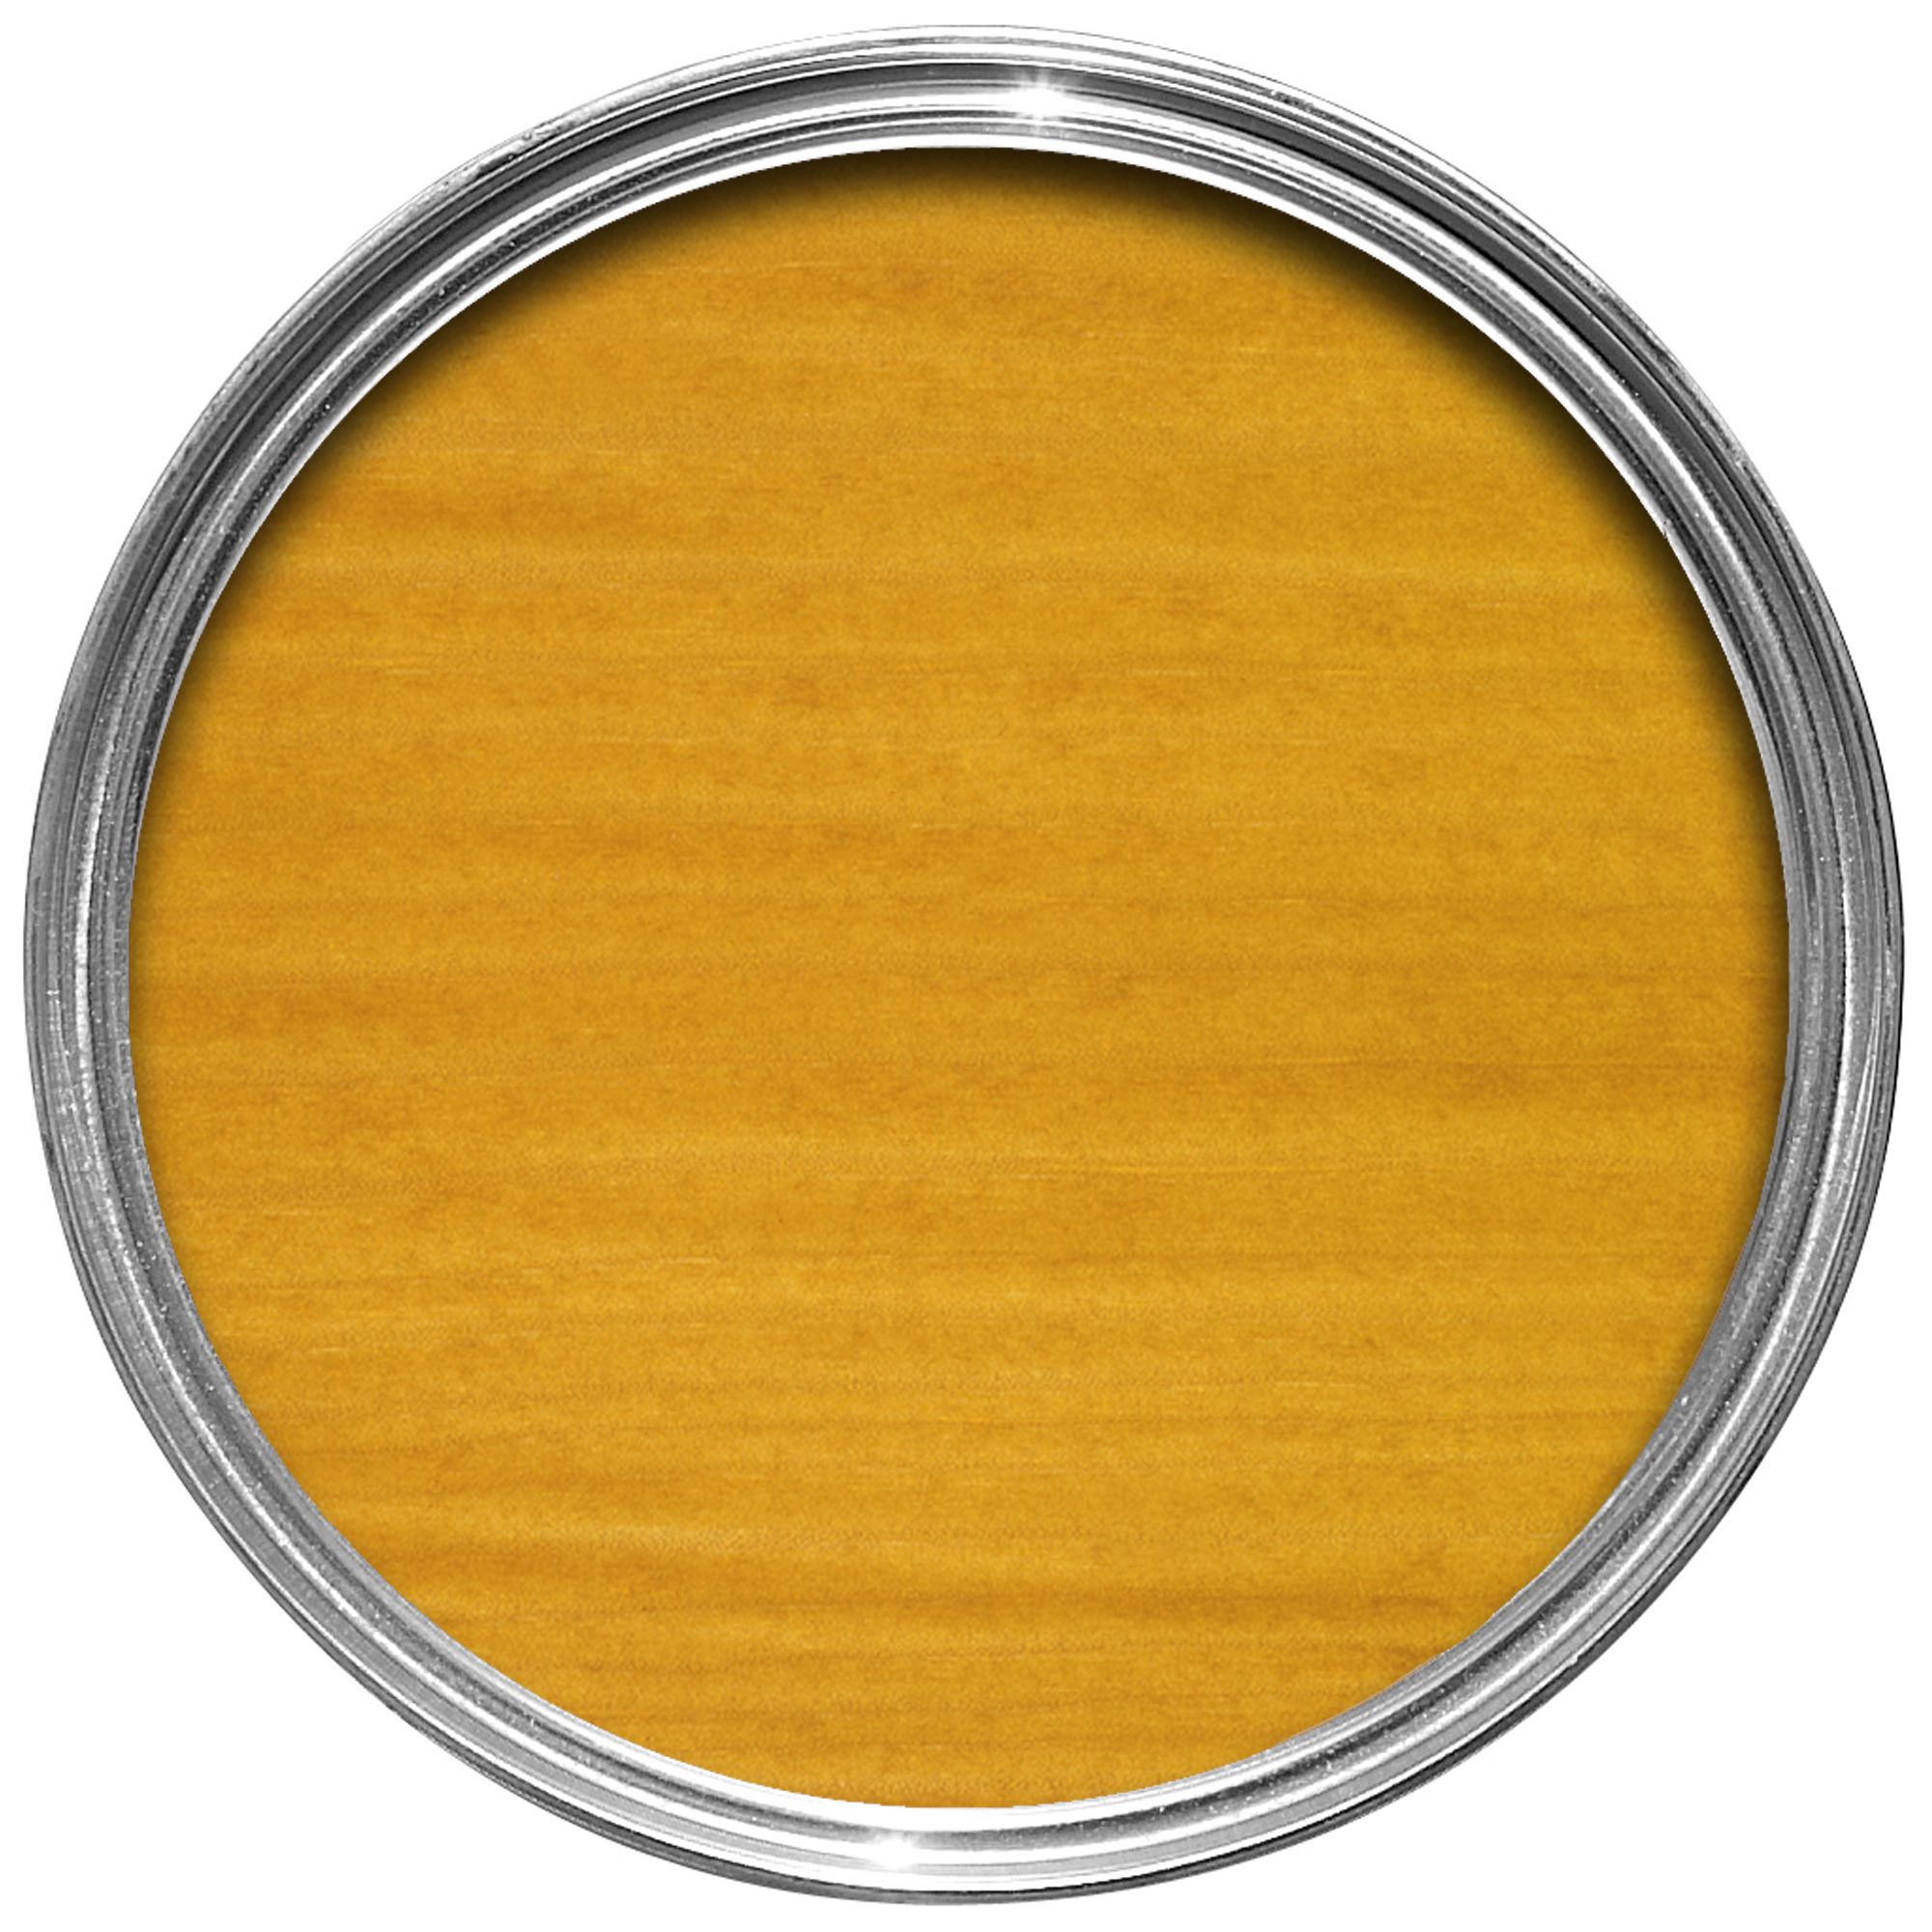 V33 Extreme protection Light Oak Satin Wood stain, 2.5L